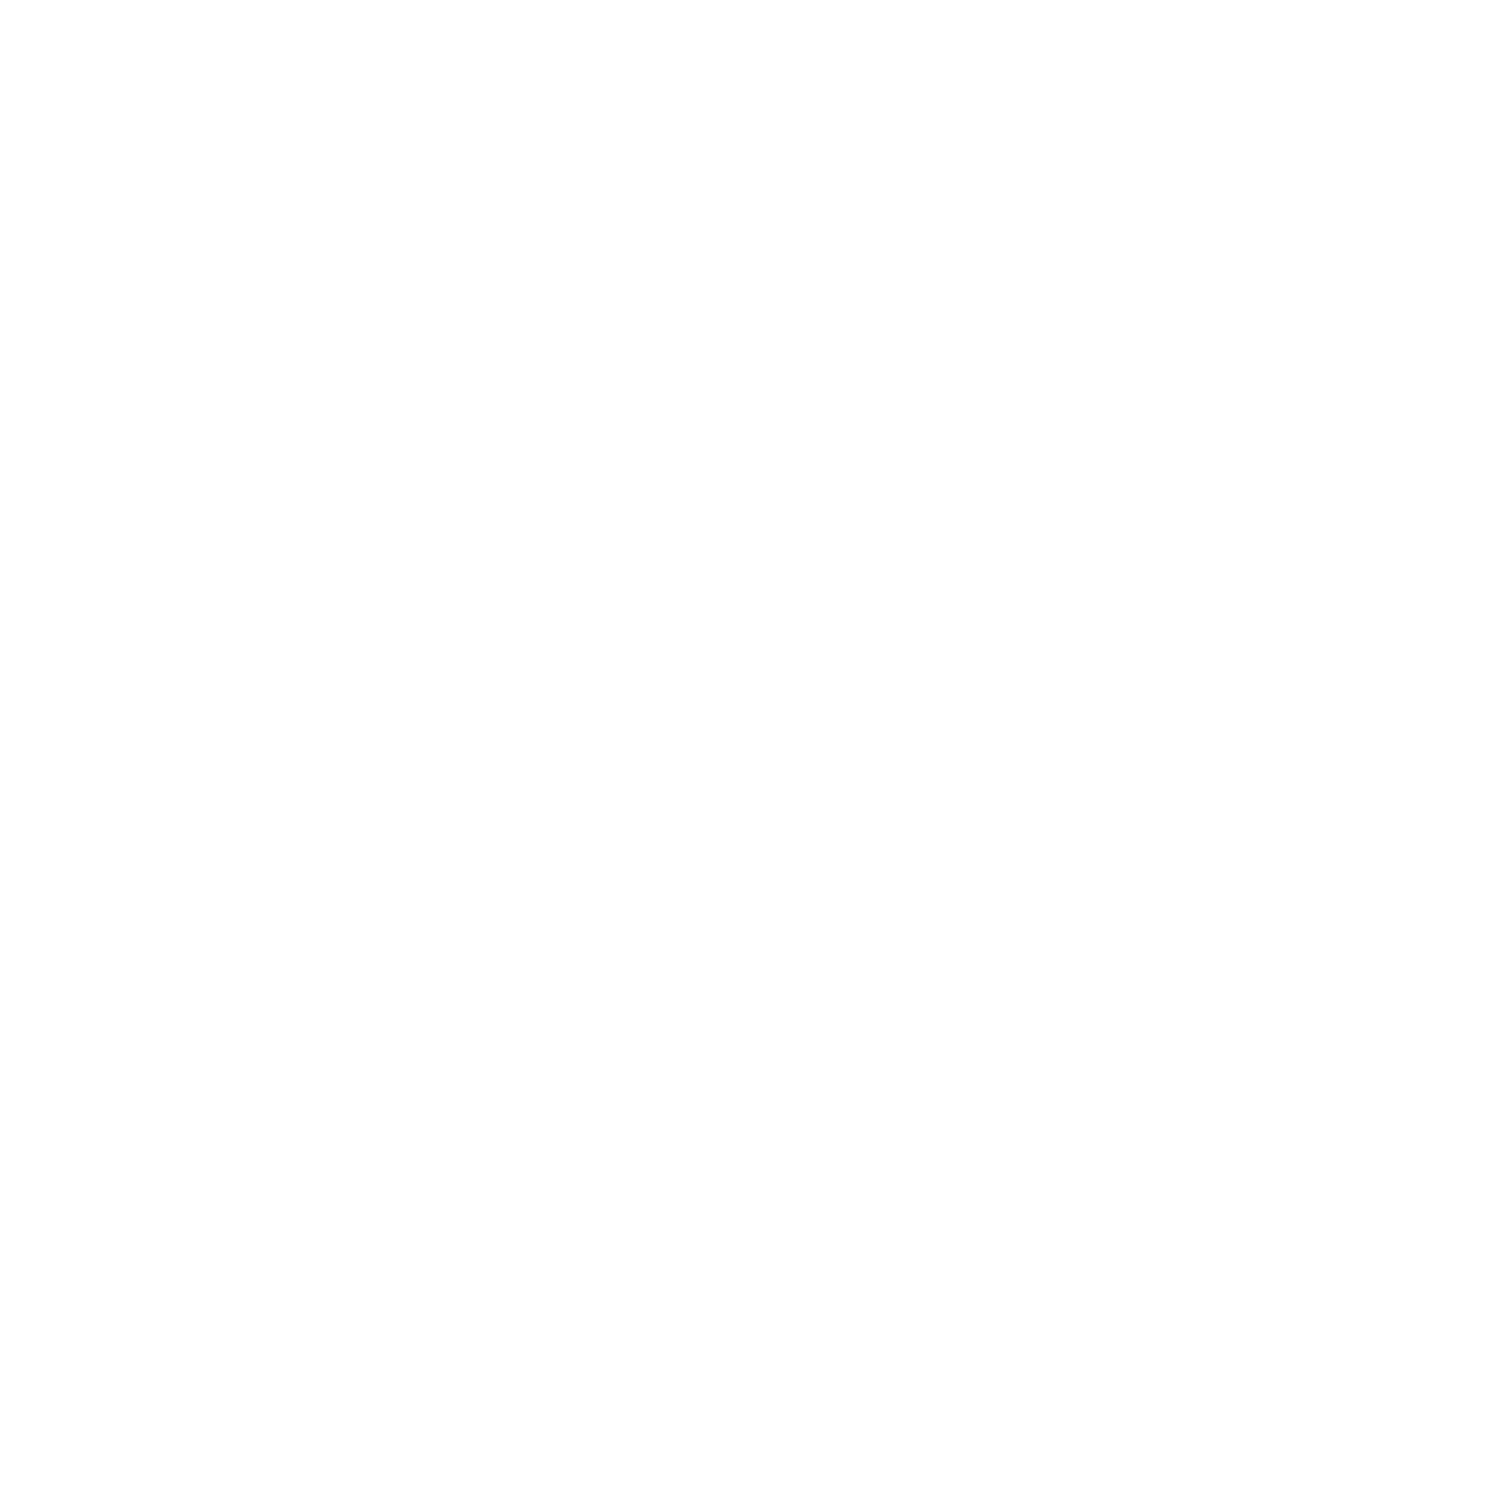 Ricky Diamonds